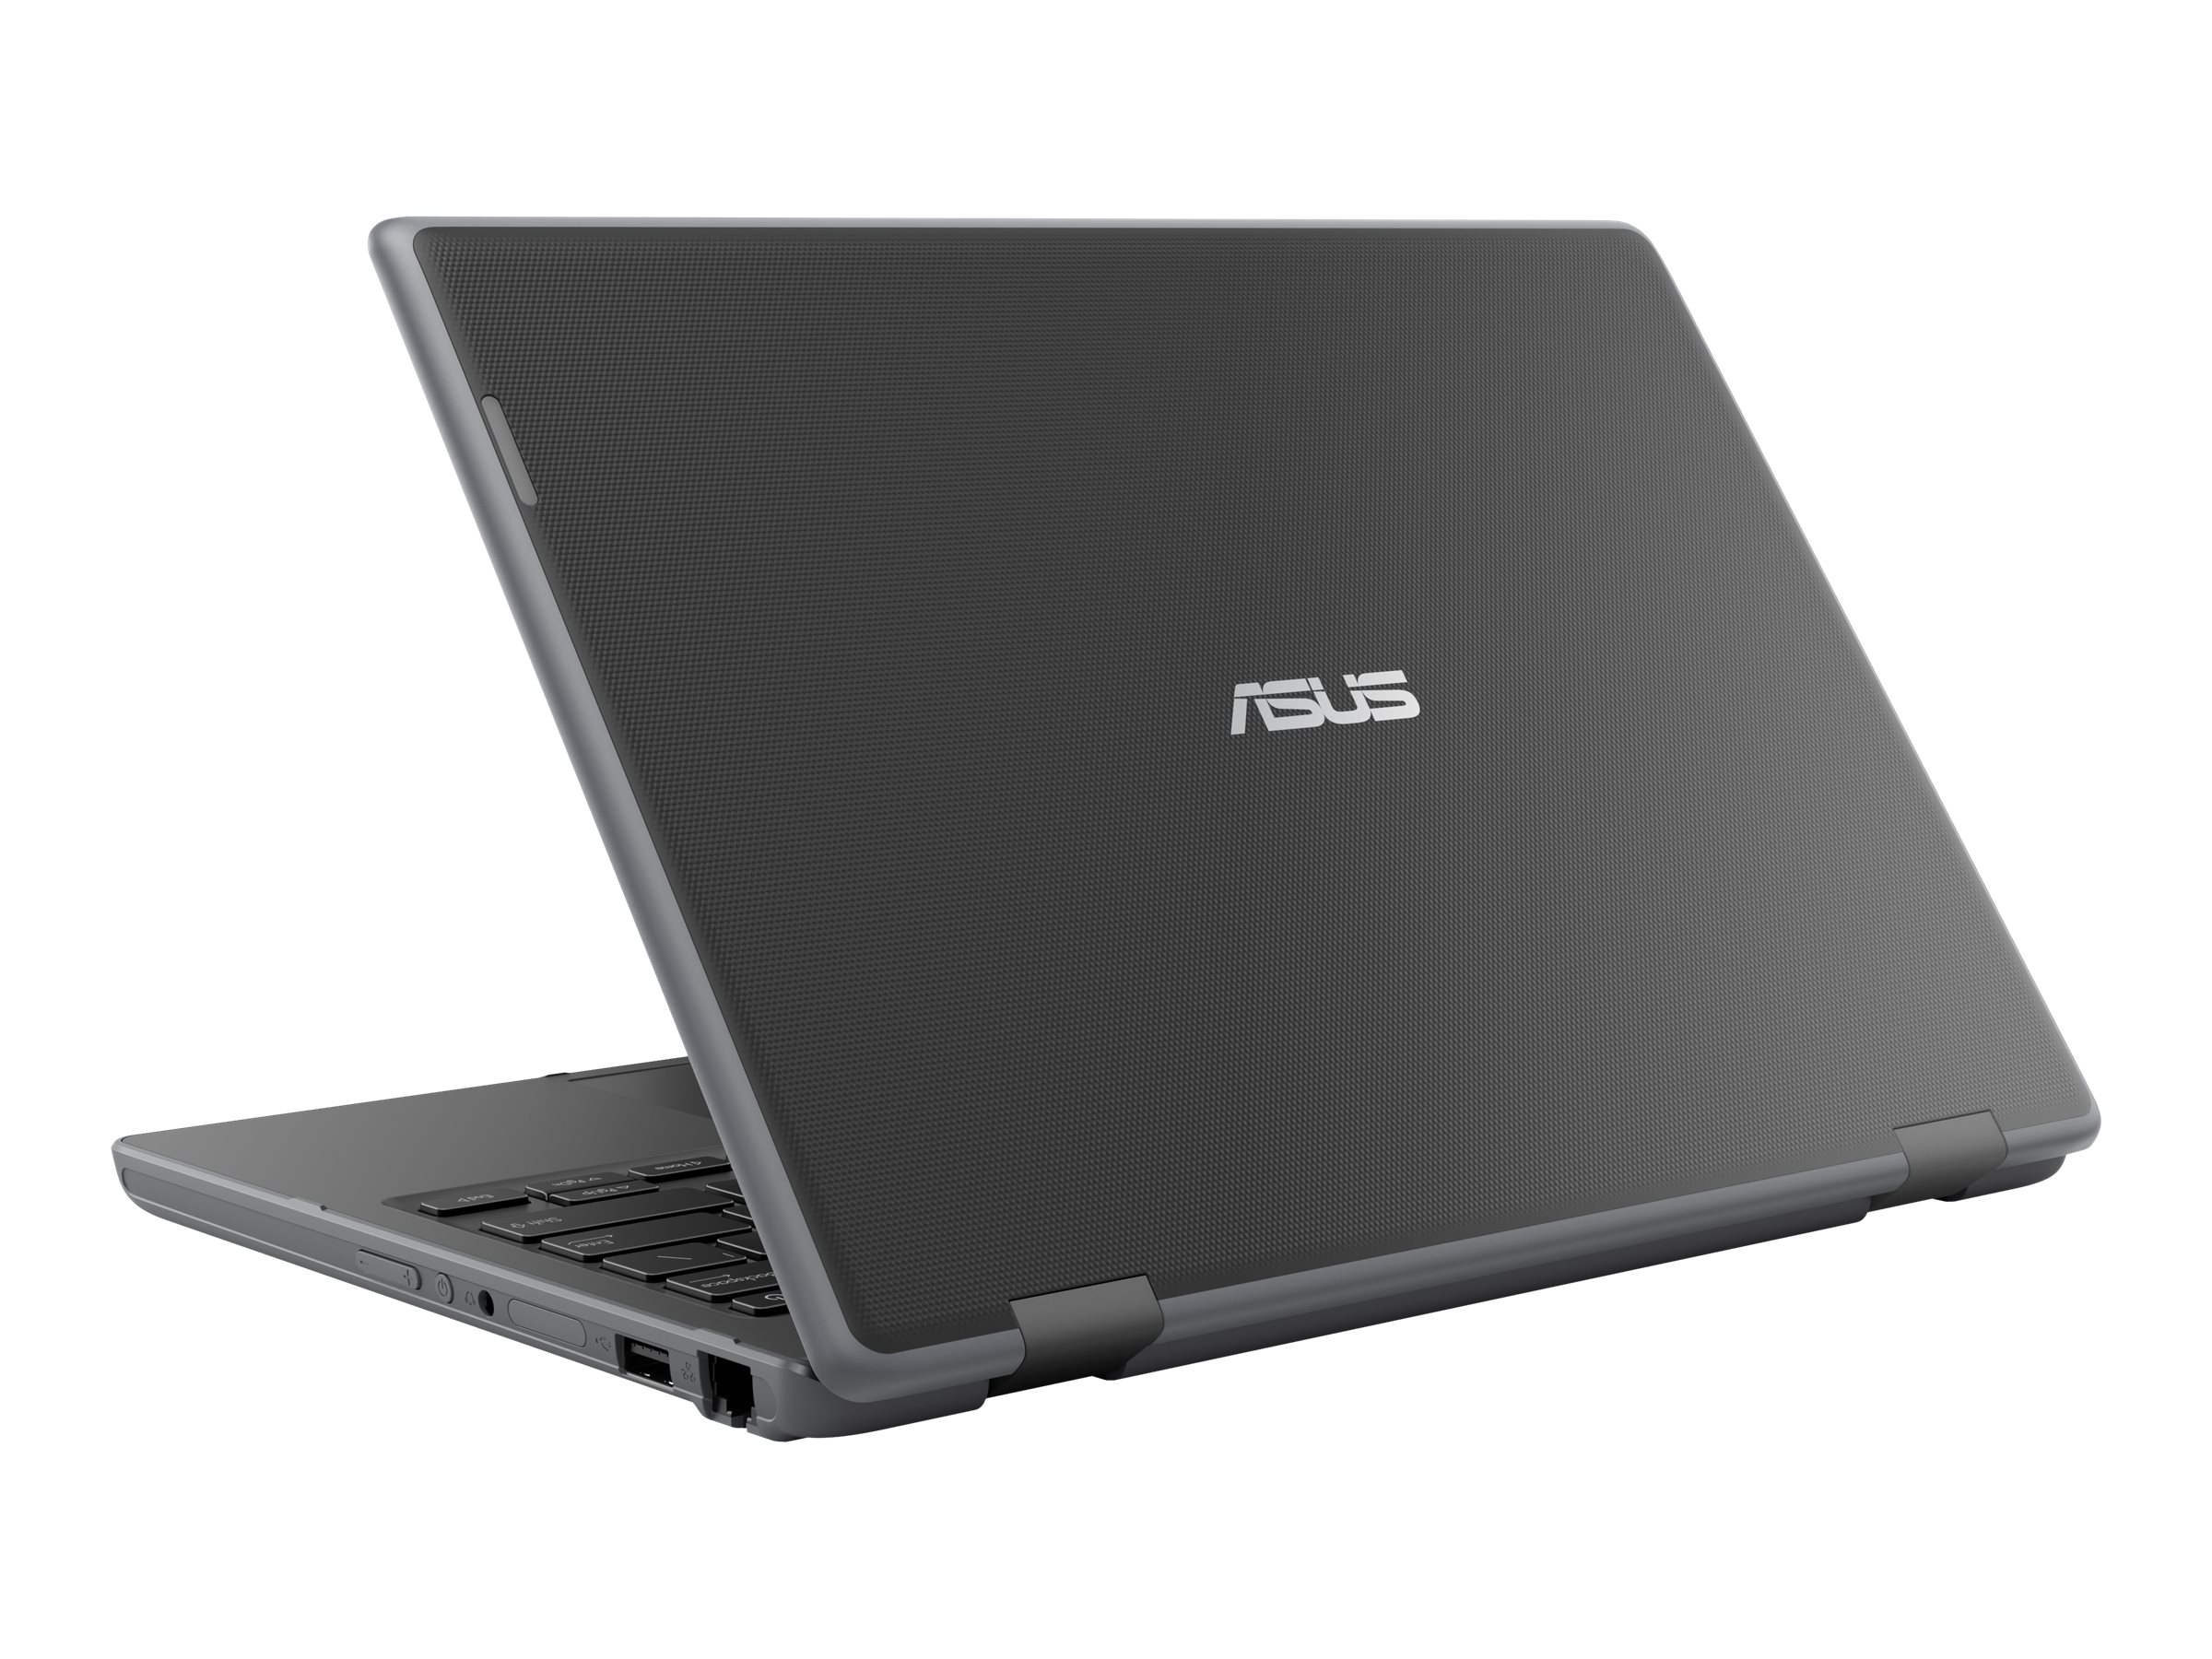 Asus 11.6" Laptop, Intel Celeron N4500, 128GB SSD, Windows 10 Pro, BR1100CKA-XS04 - image 5 of 8